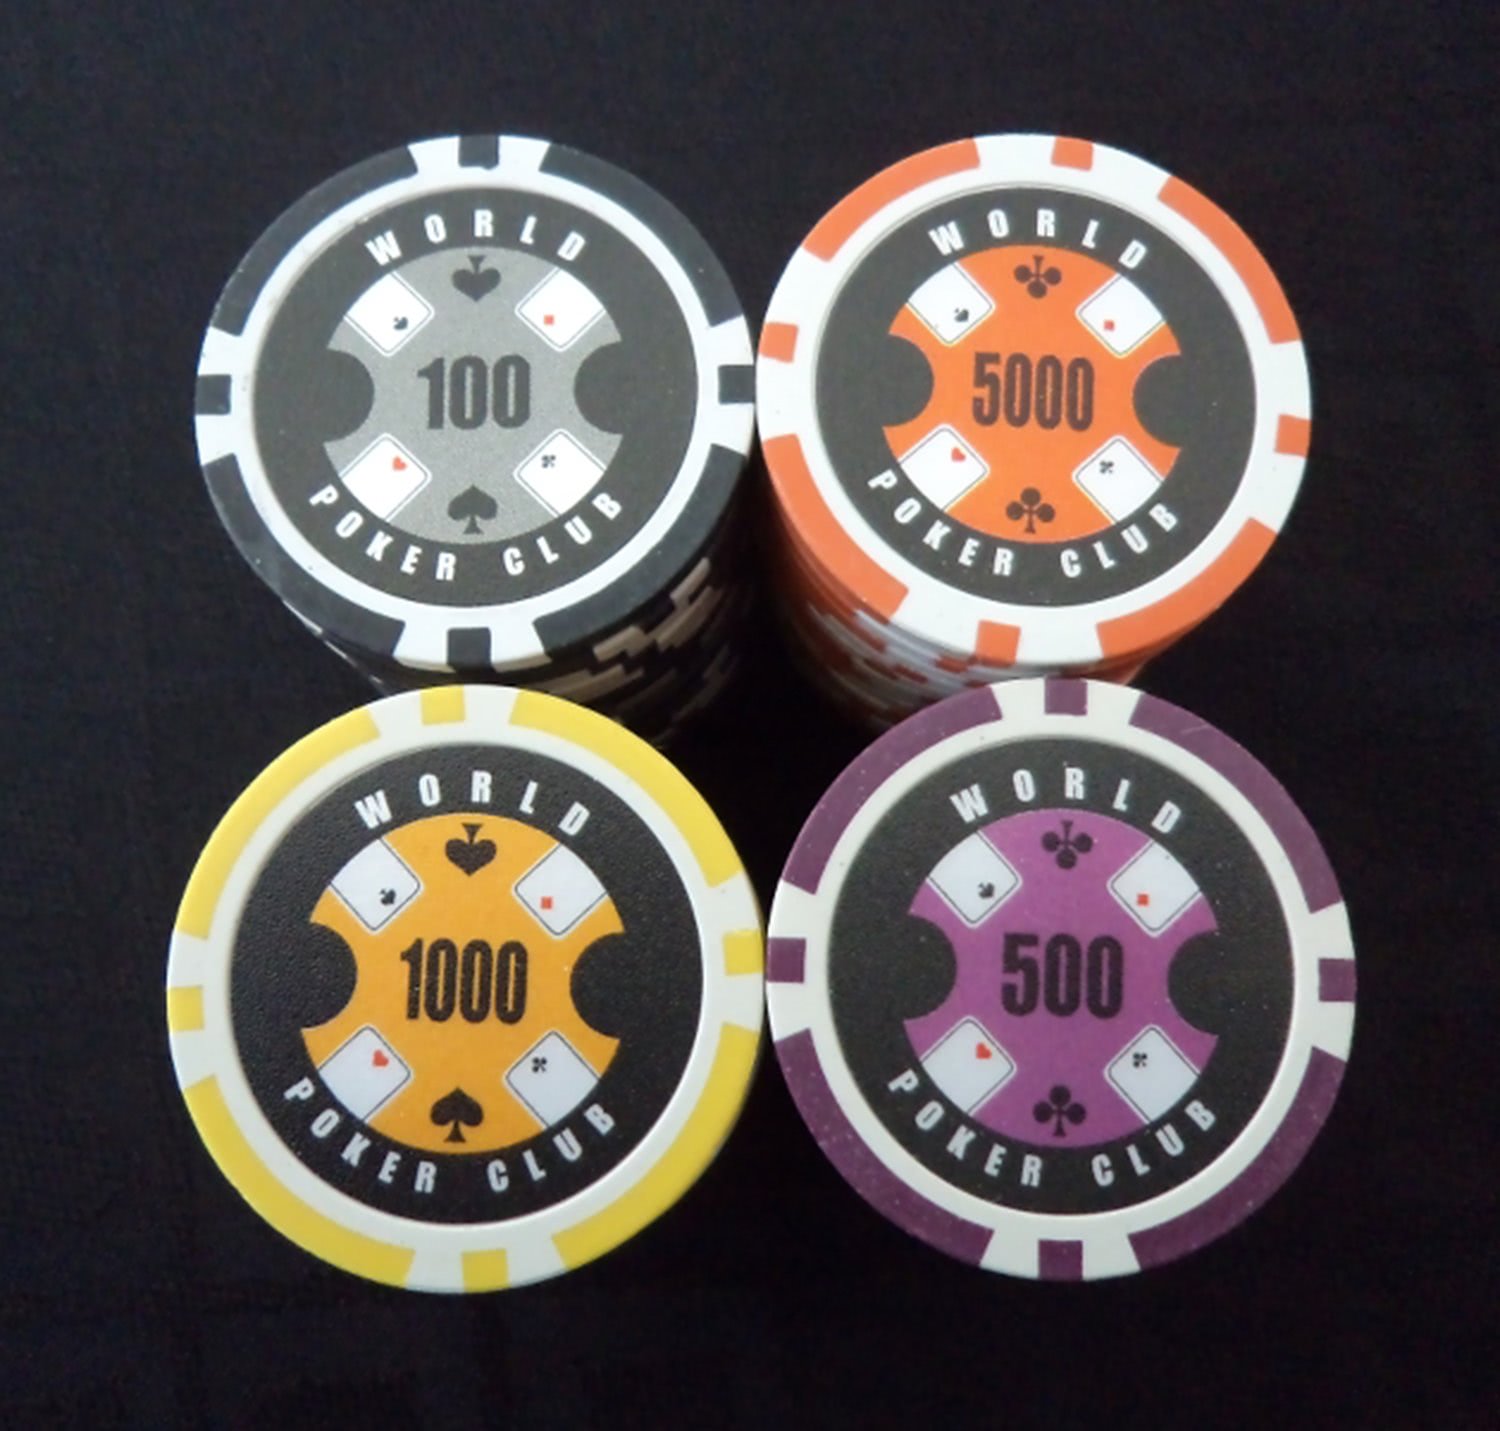 tandard casino chip colors